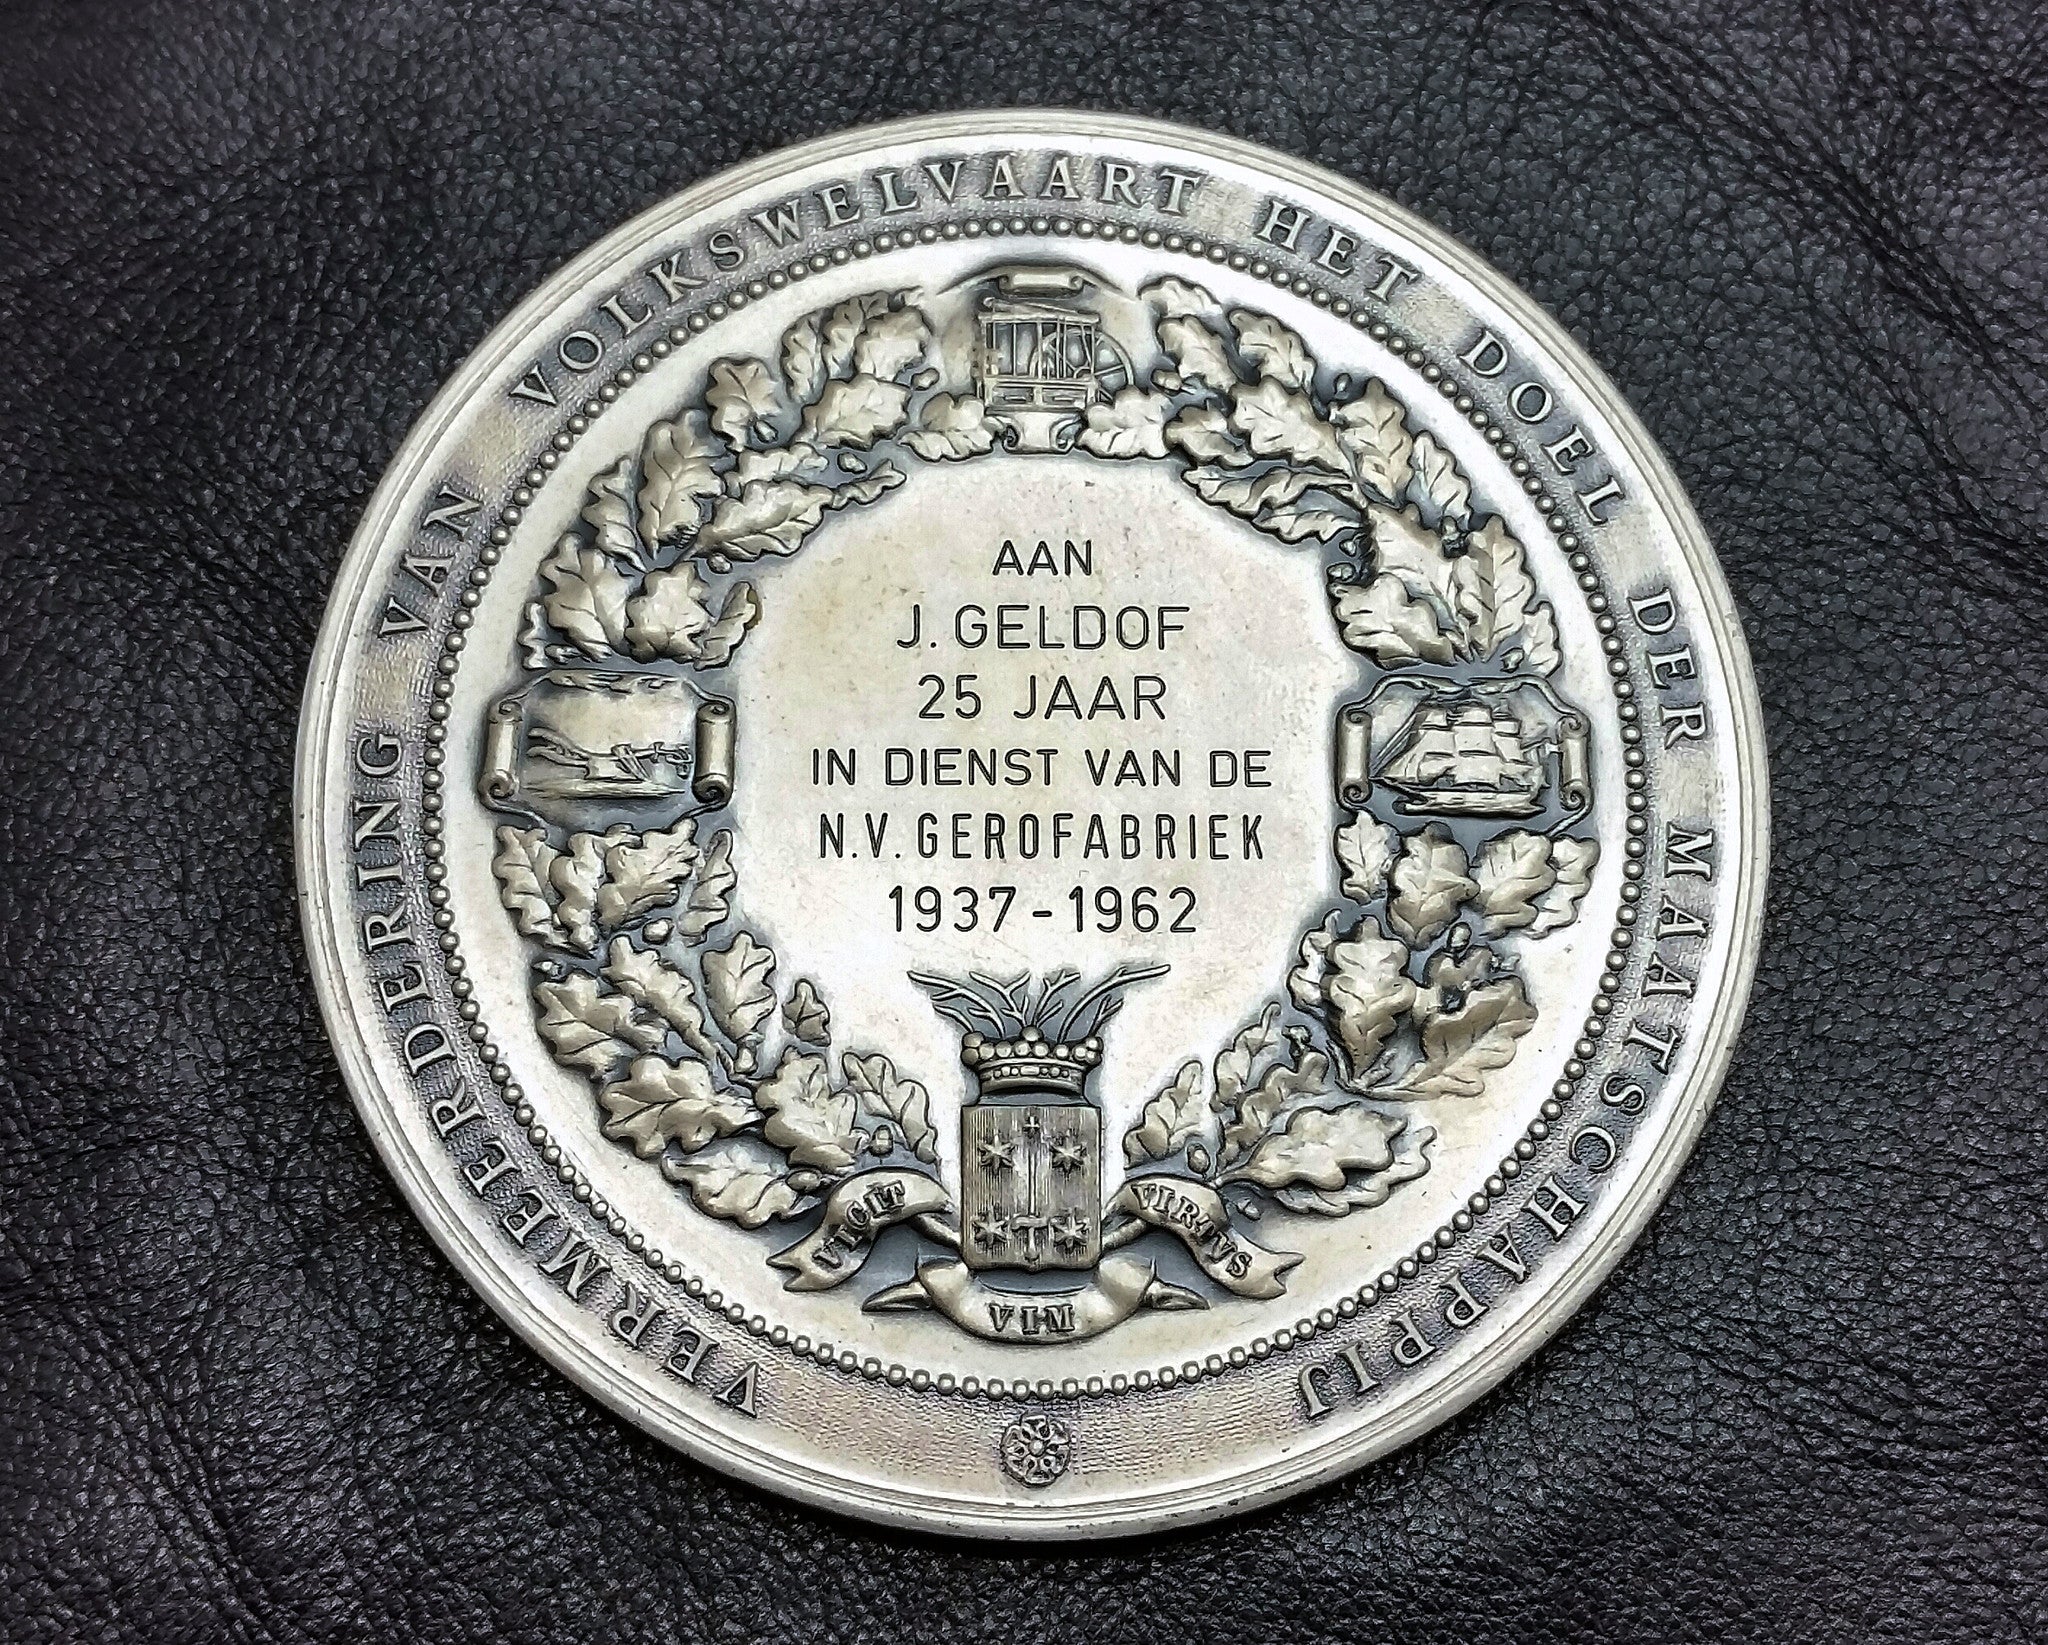 Dutch Industry & Trade medal